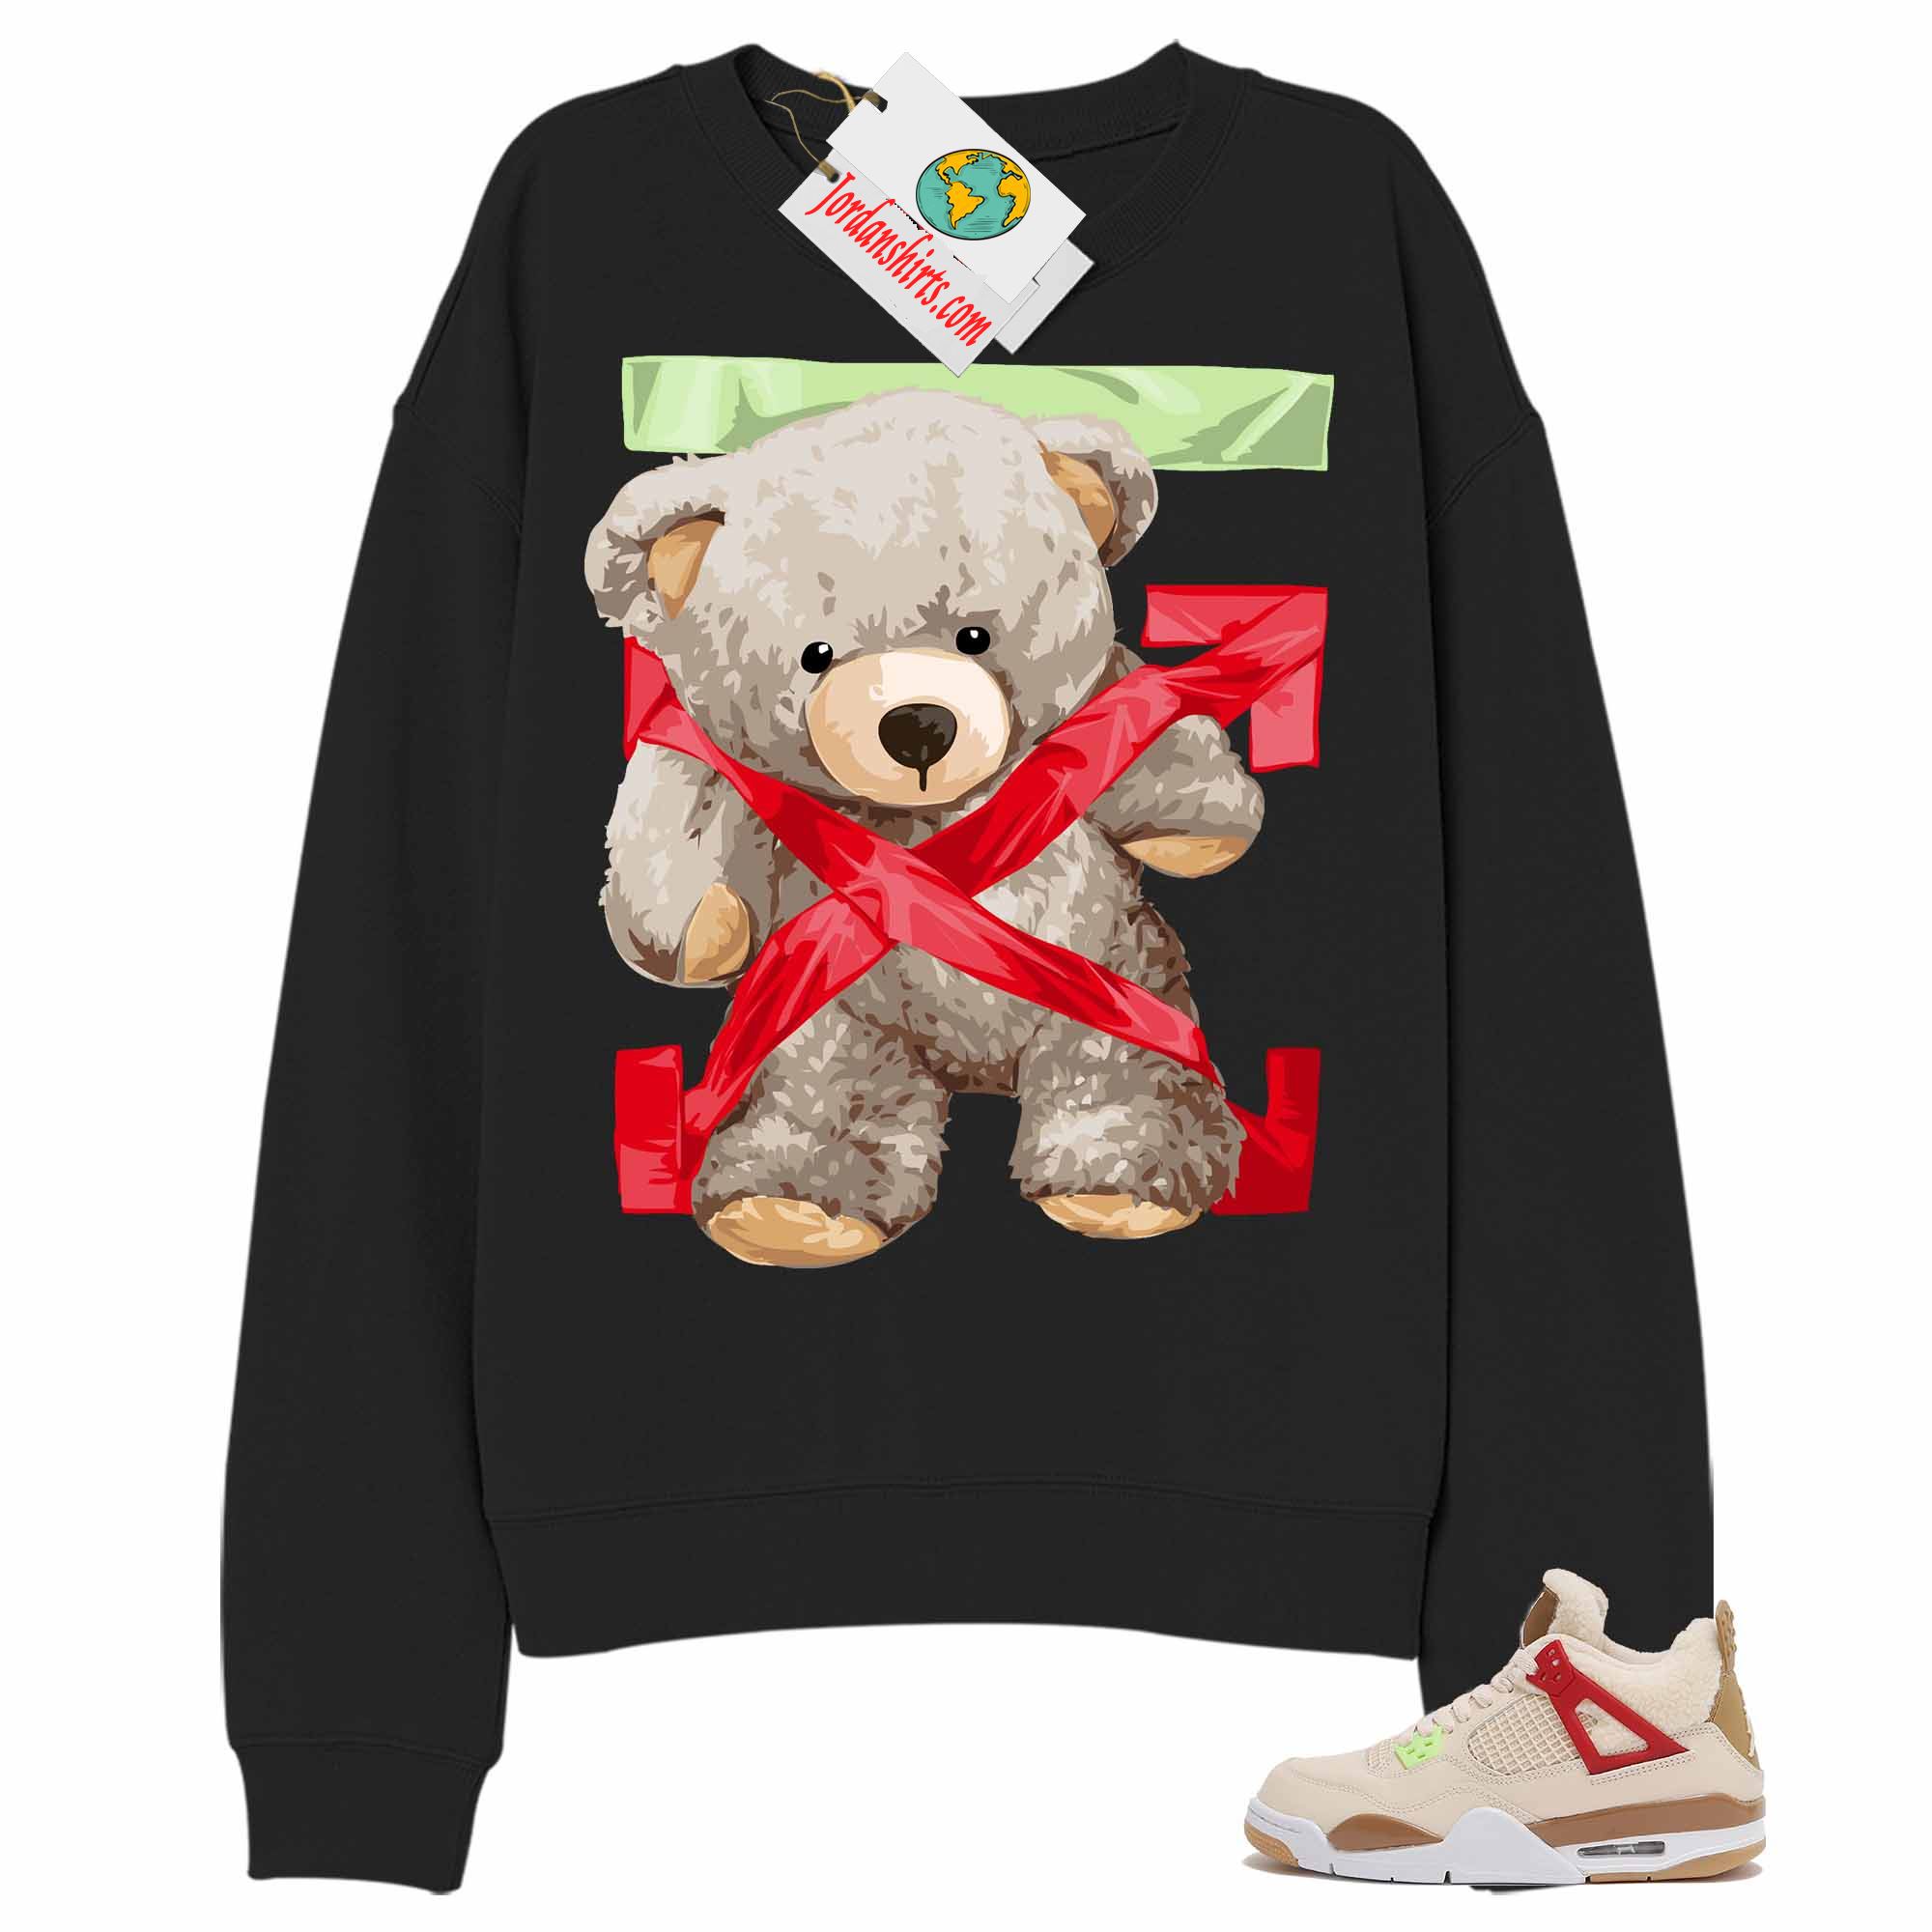 Jordan 4 Sweatshirt, Teddy Bear Duck Tape Black Sweatshirt Air Jordan 4 Wild Things 4s Size Up To 5xl